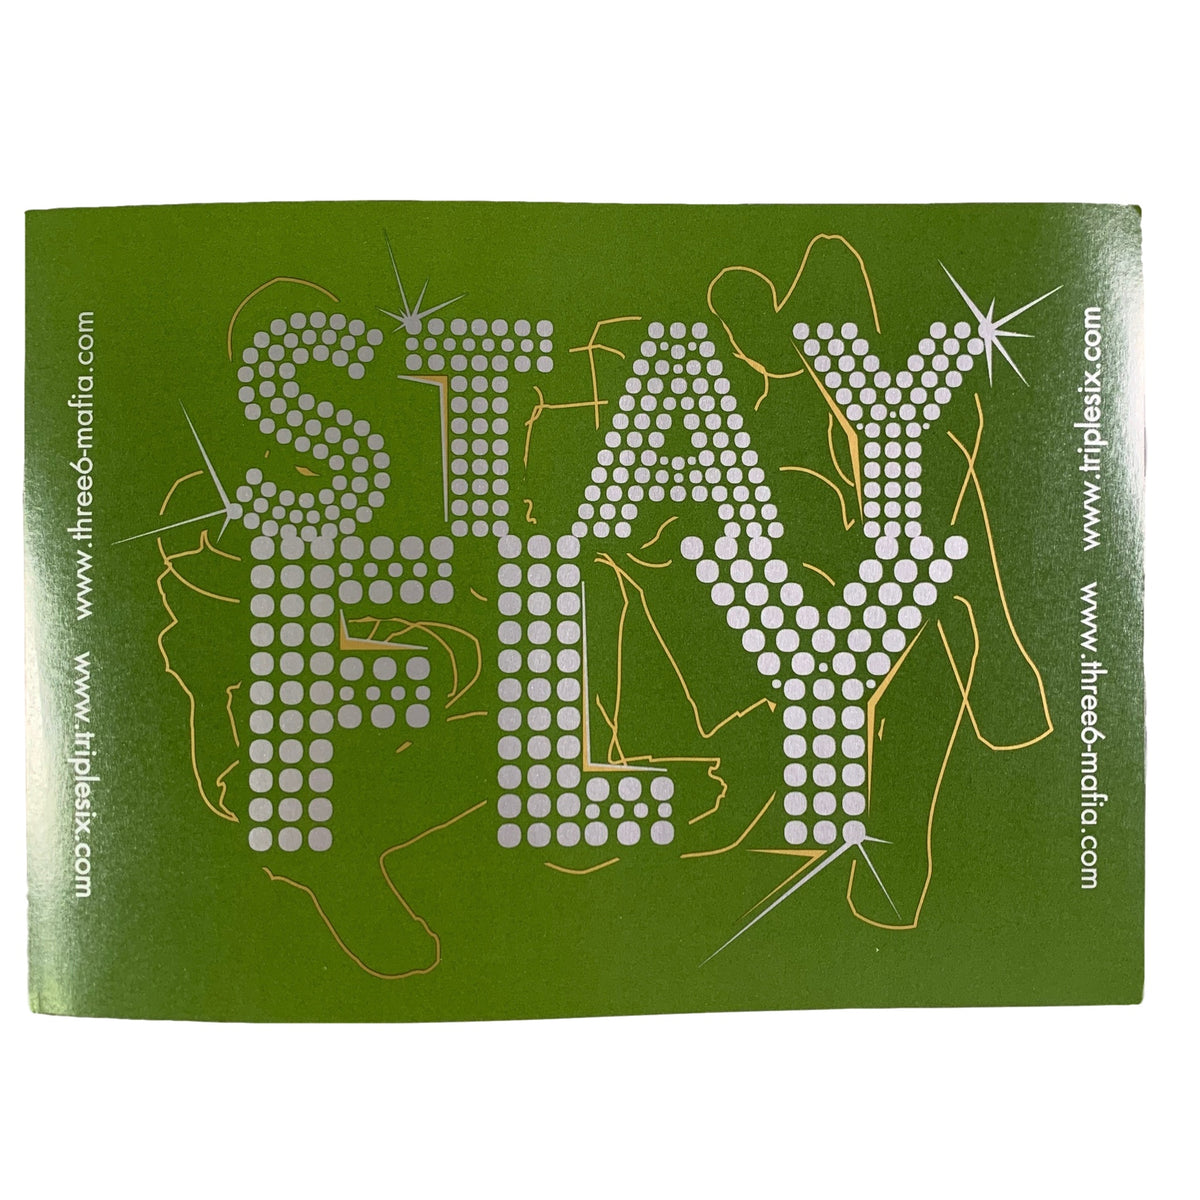 Vintage Three 6 Mafia &quot;Stay Fly&quot; Promo Sticker - jointcustodydc